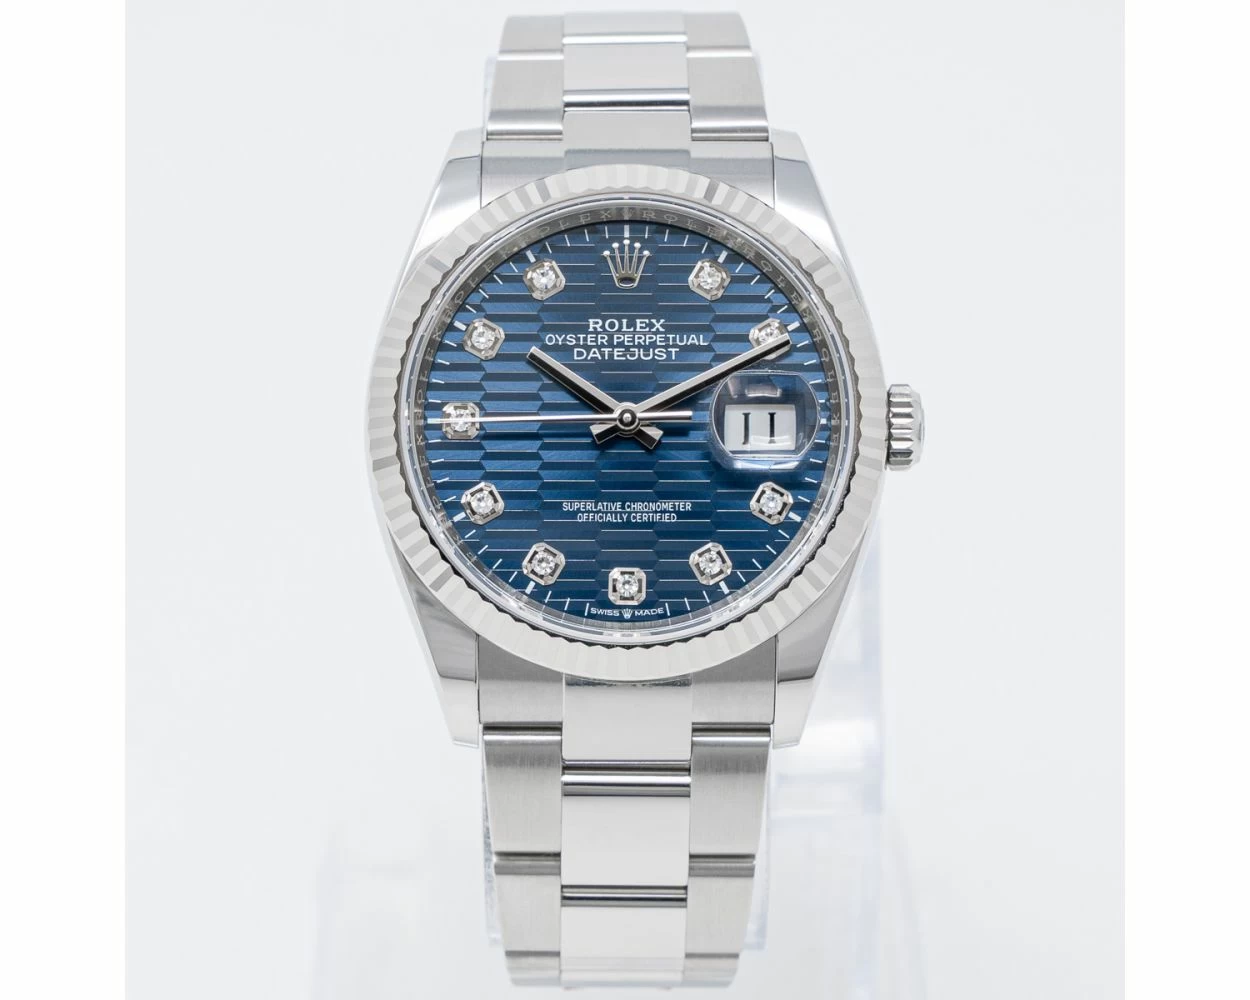 Buy Genuine Used Rolex Datejust 36 126234 Watch - Bright Blue